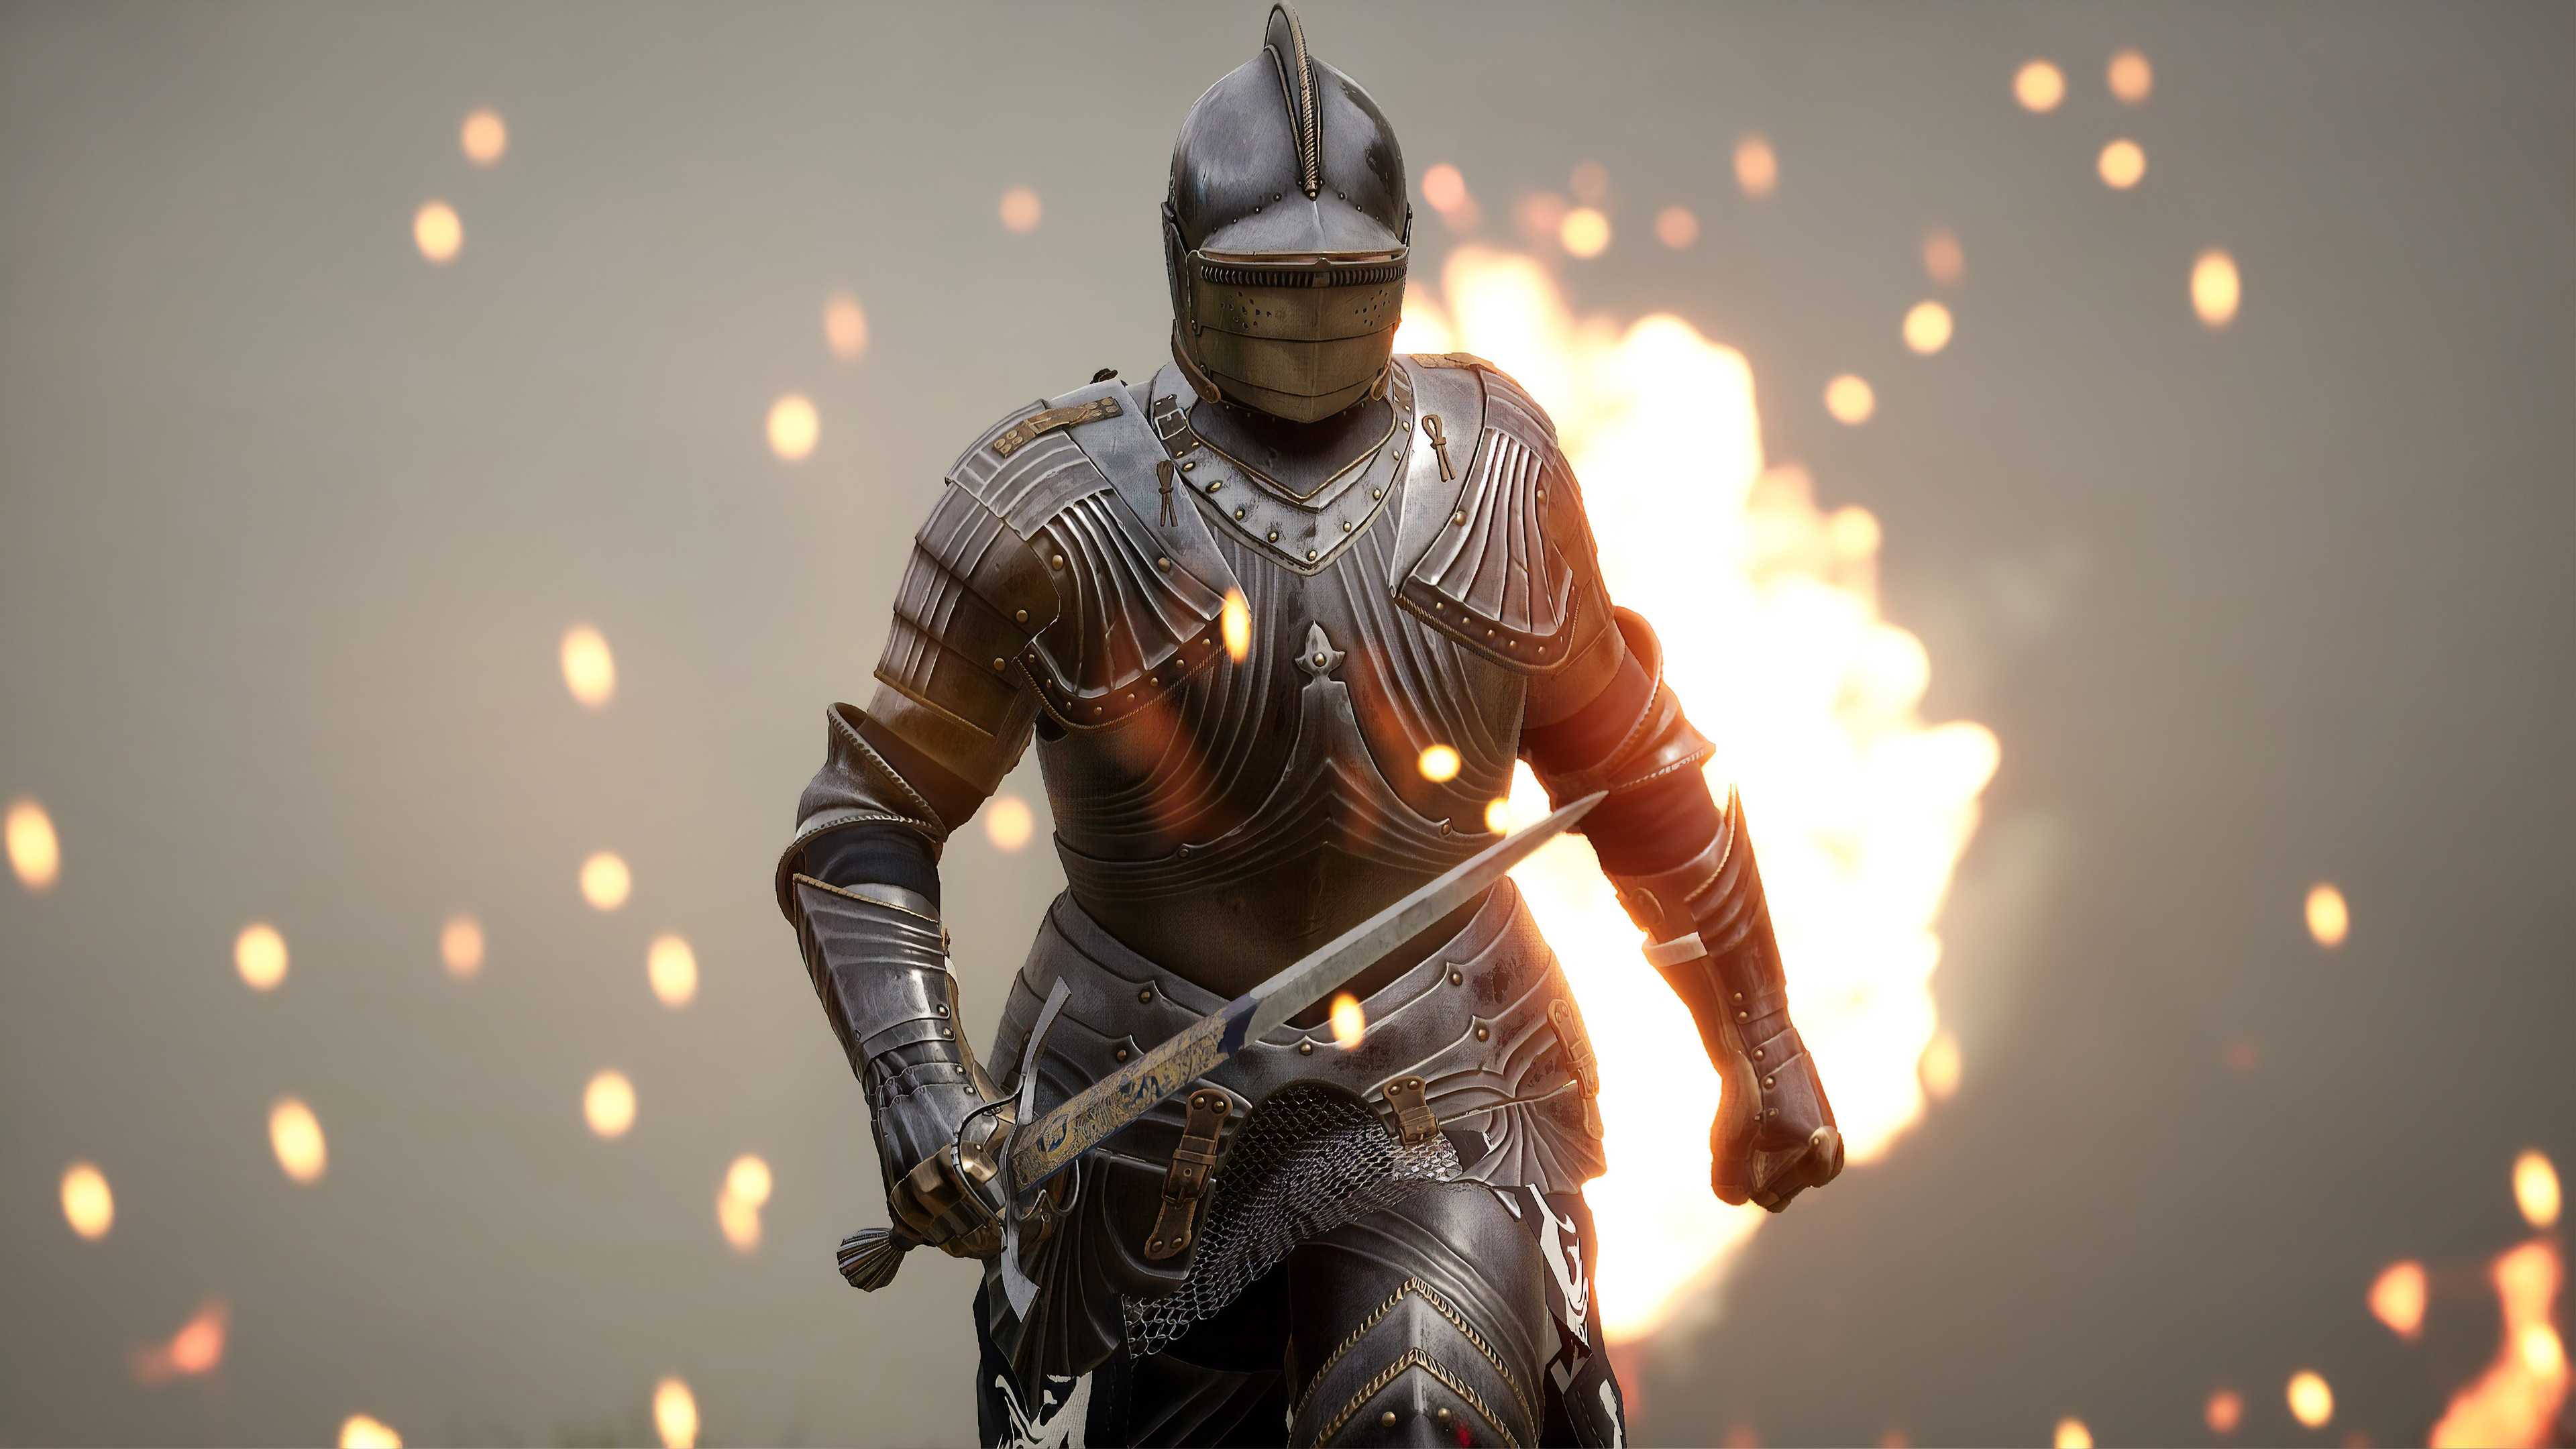 Armor Knight Sword Warrior 3840x2160